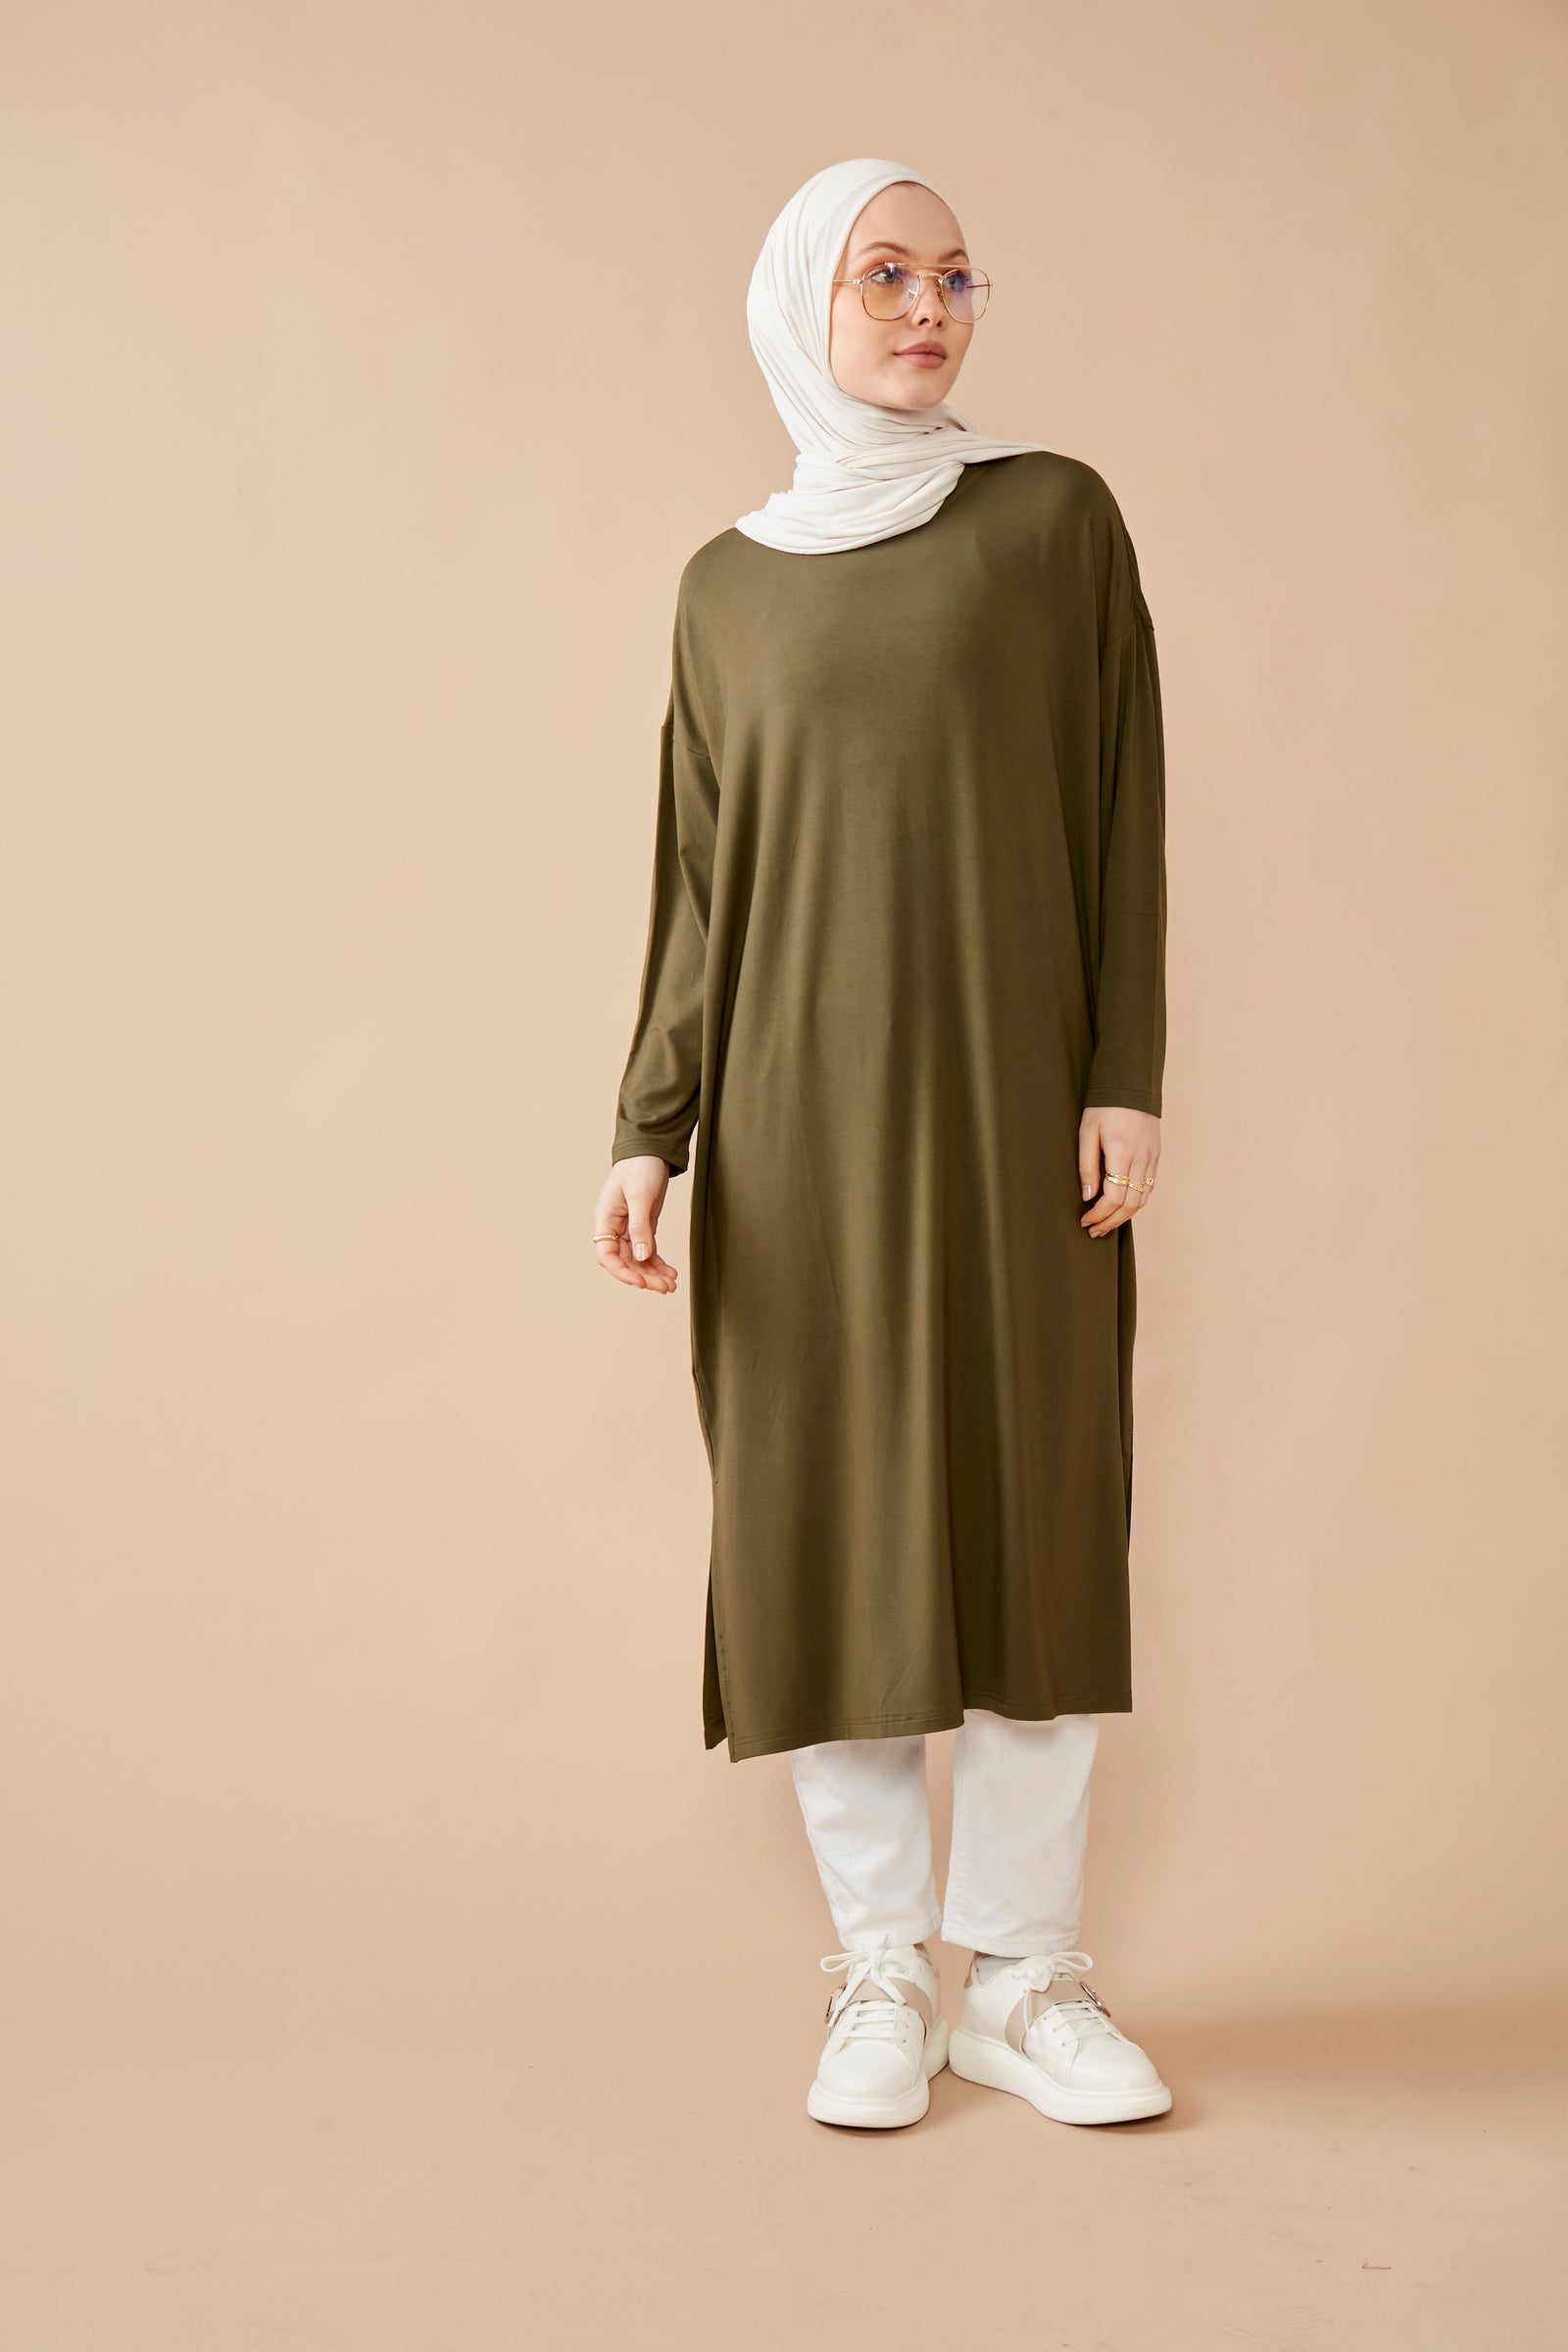 Verona Collection: Modern Islamic Clothing+Pics - Ijtihad Network